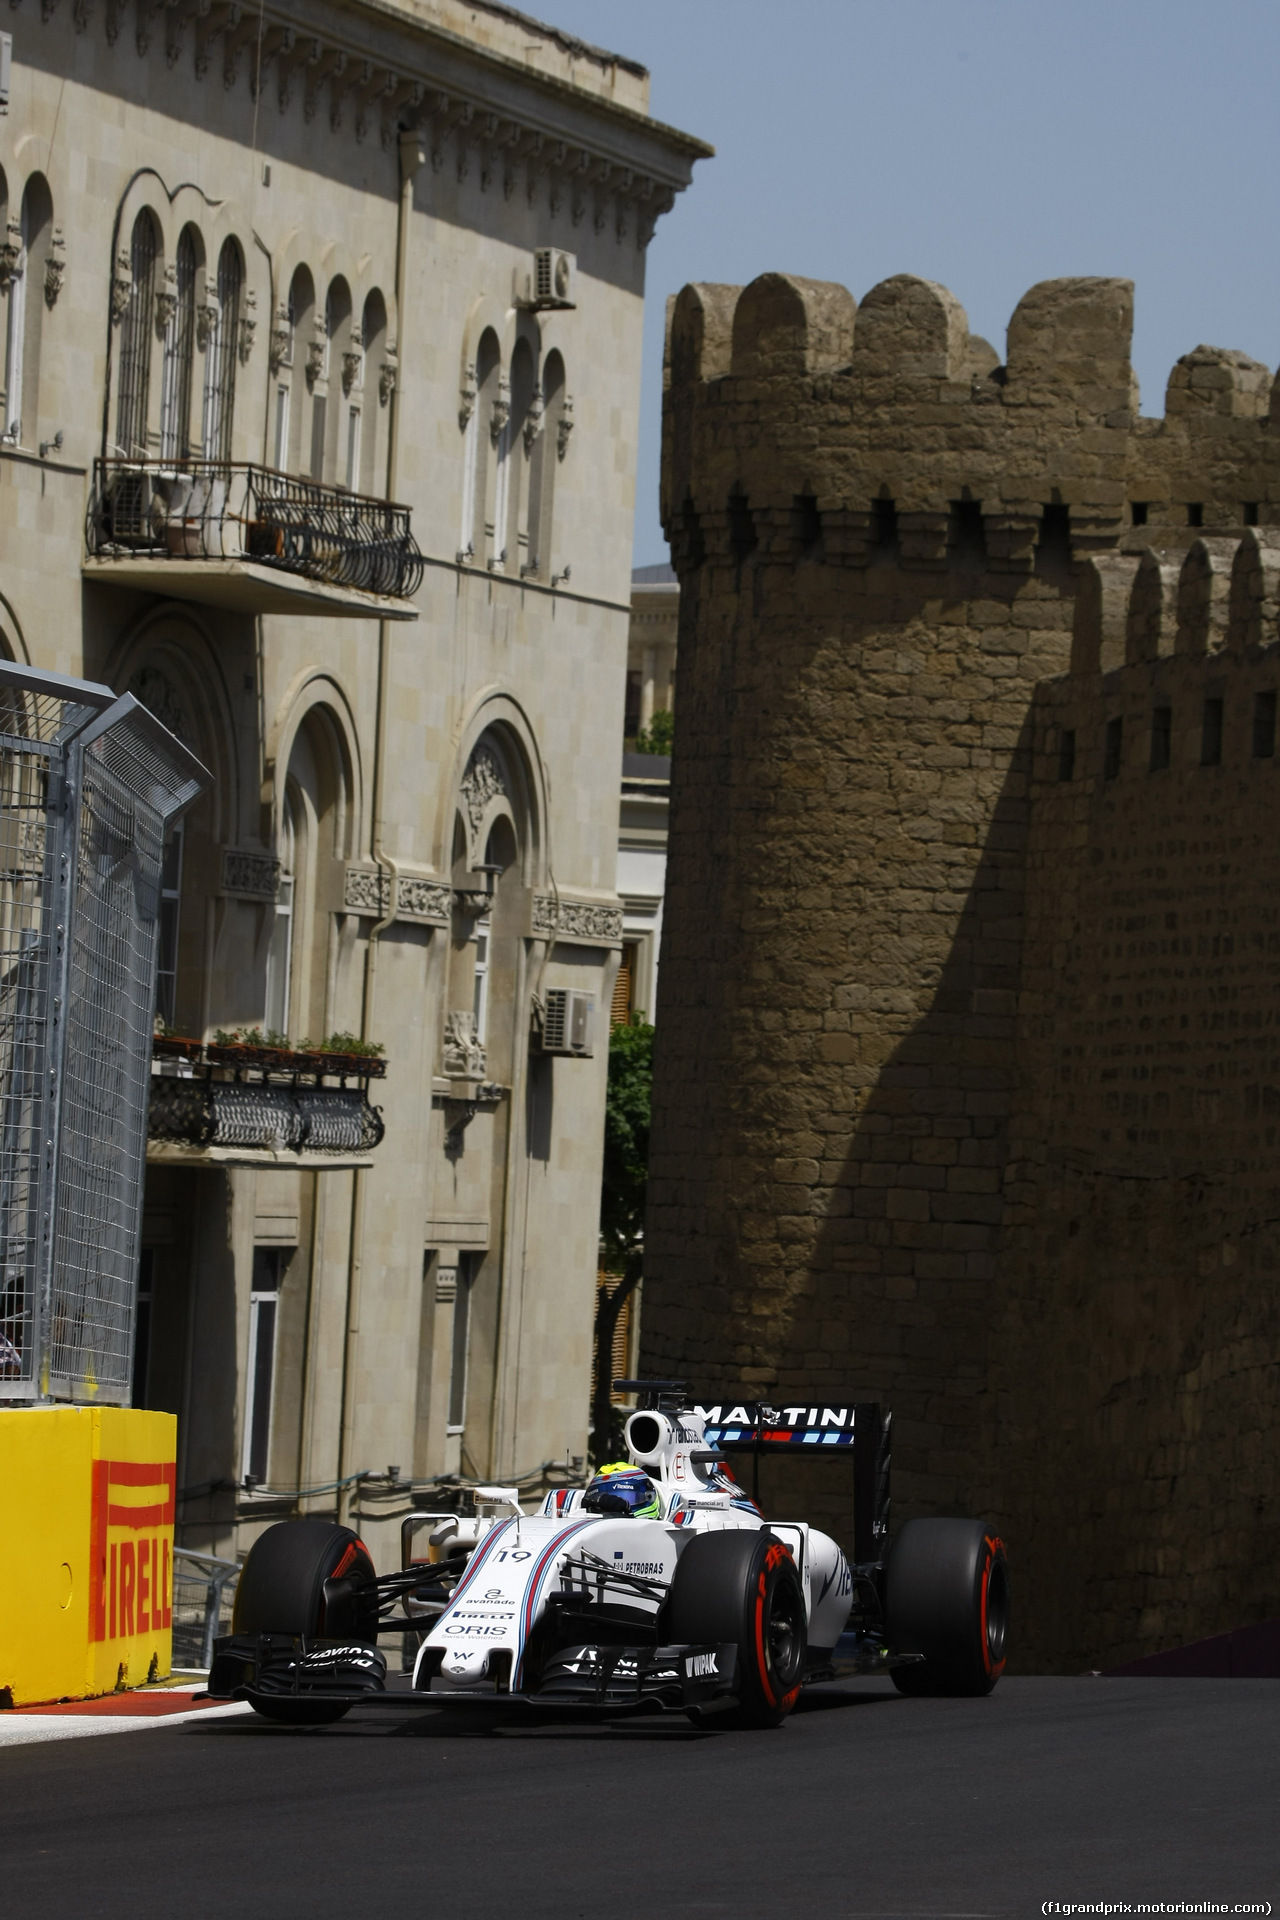 GP EUROPA, Felipe Massa (BRA) Williams FW38